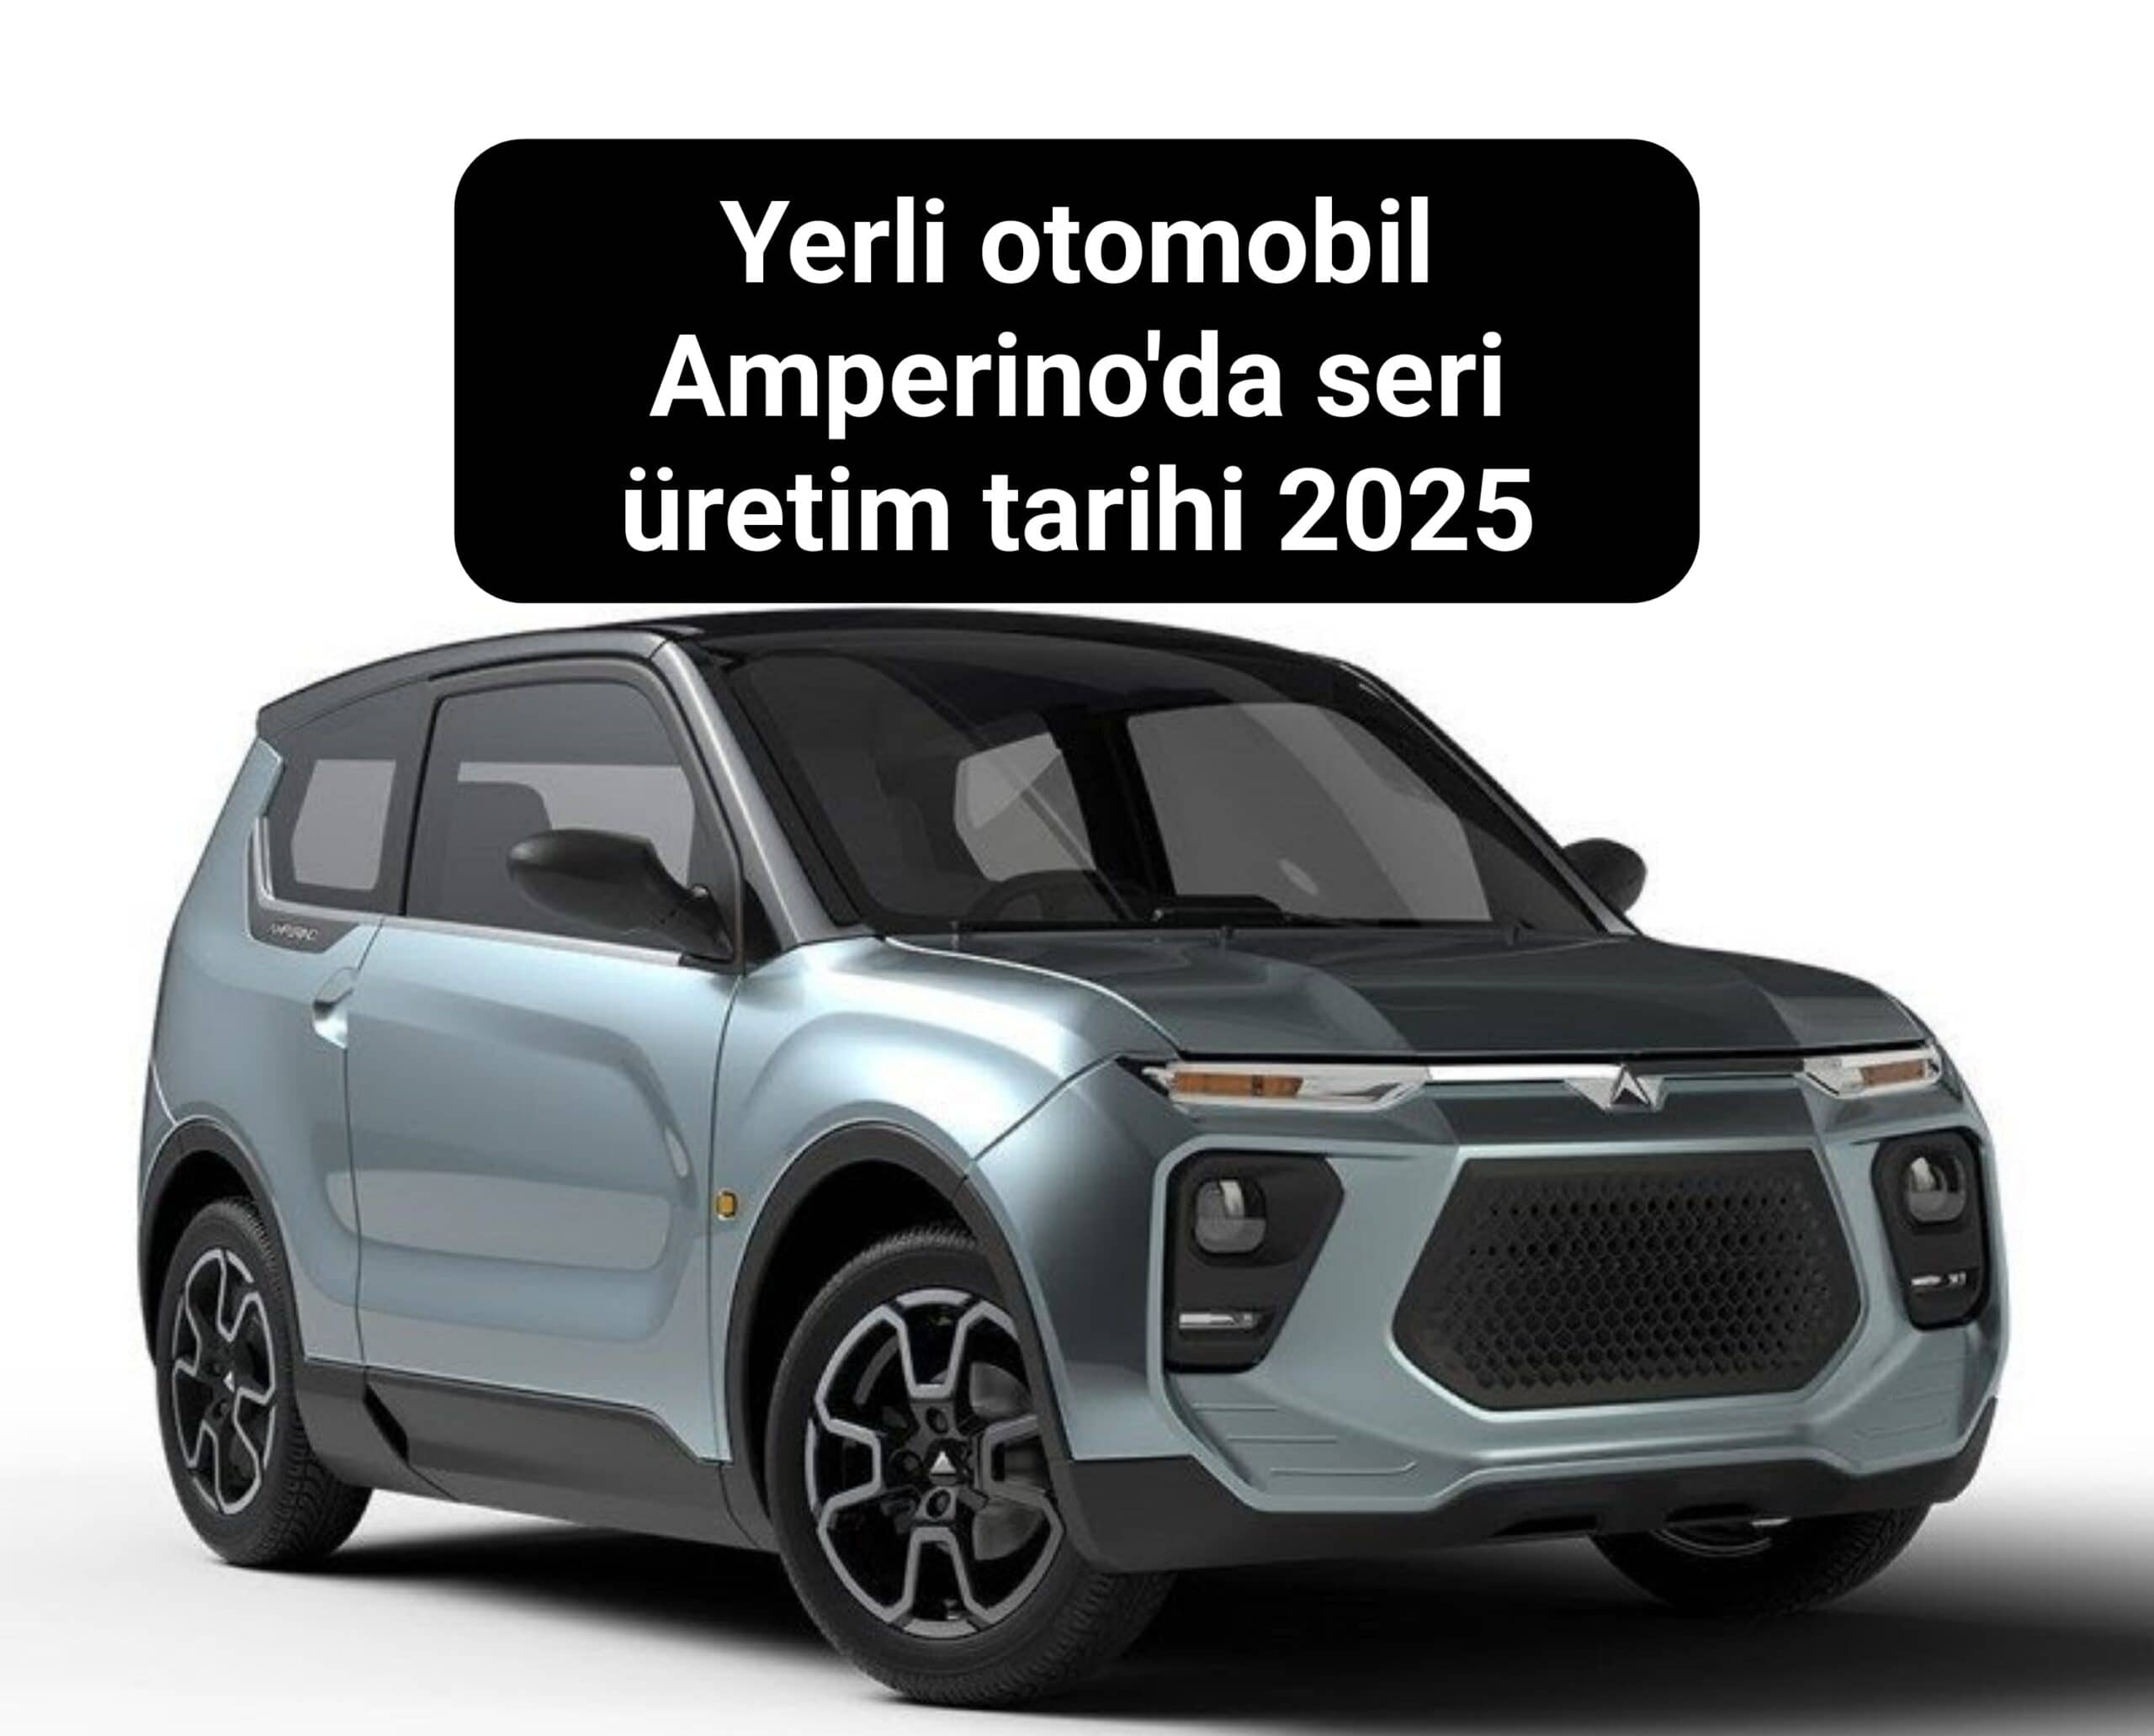 Yerli otomobil Amperino'da seri üretim tarihi 2025